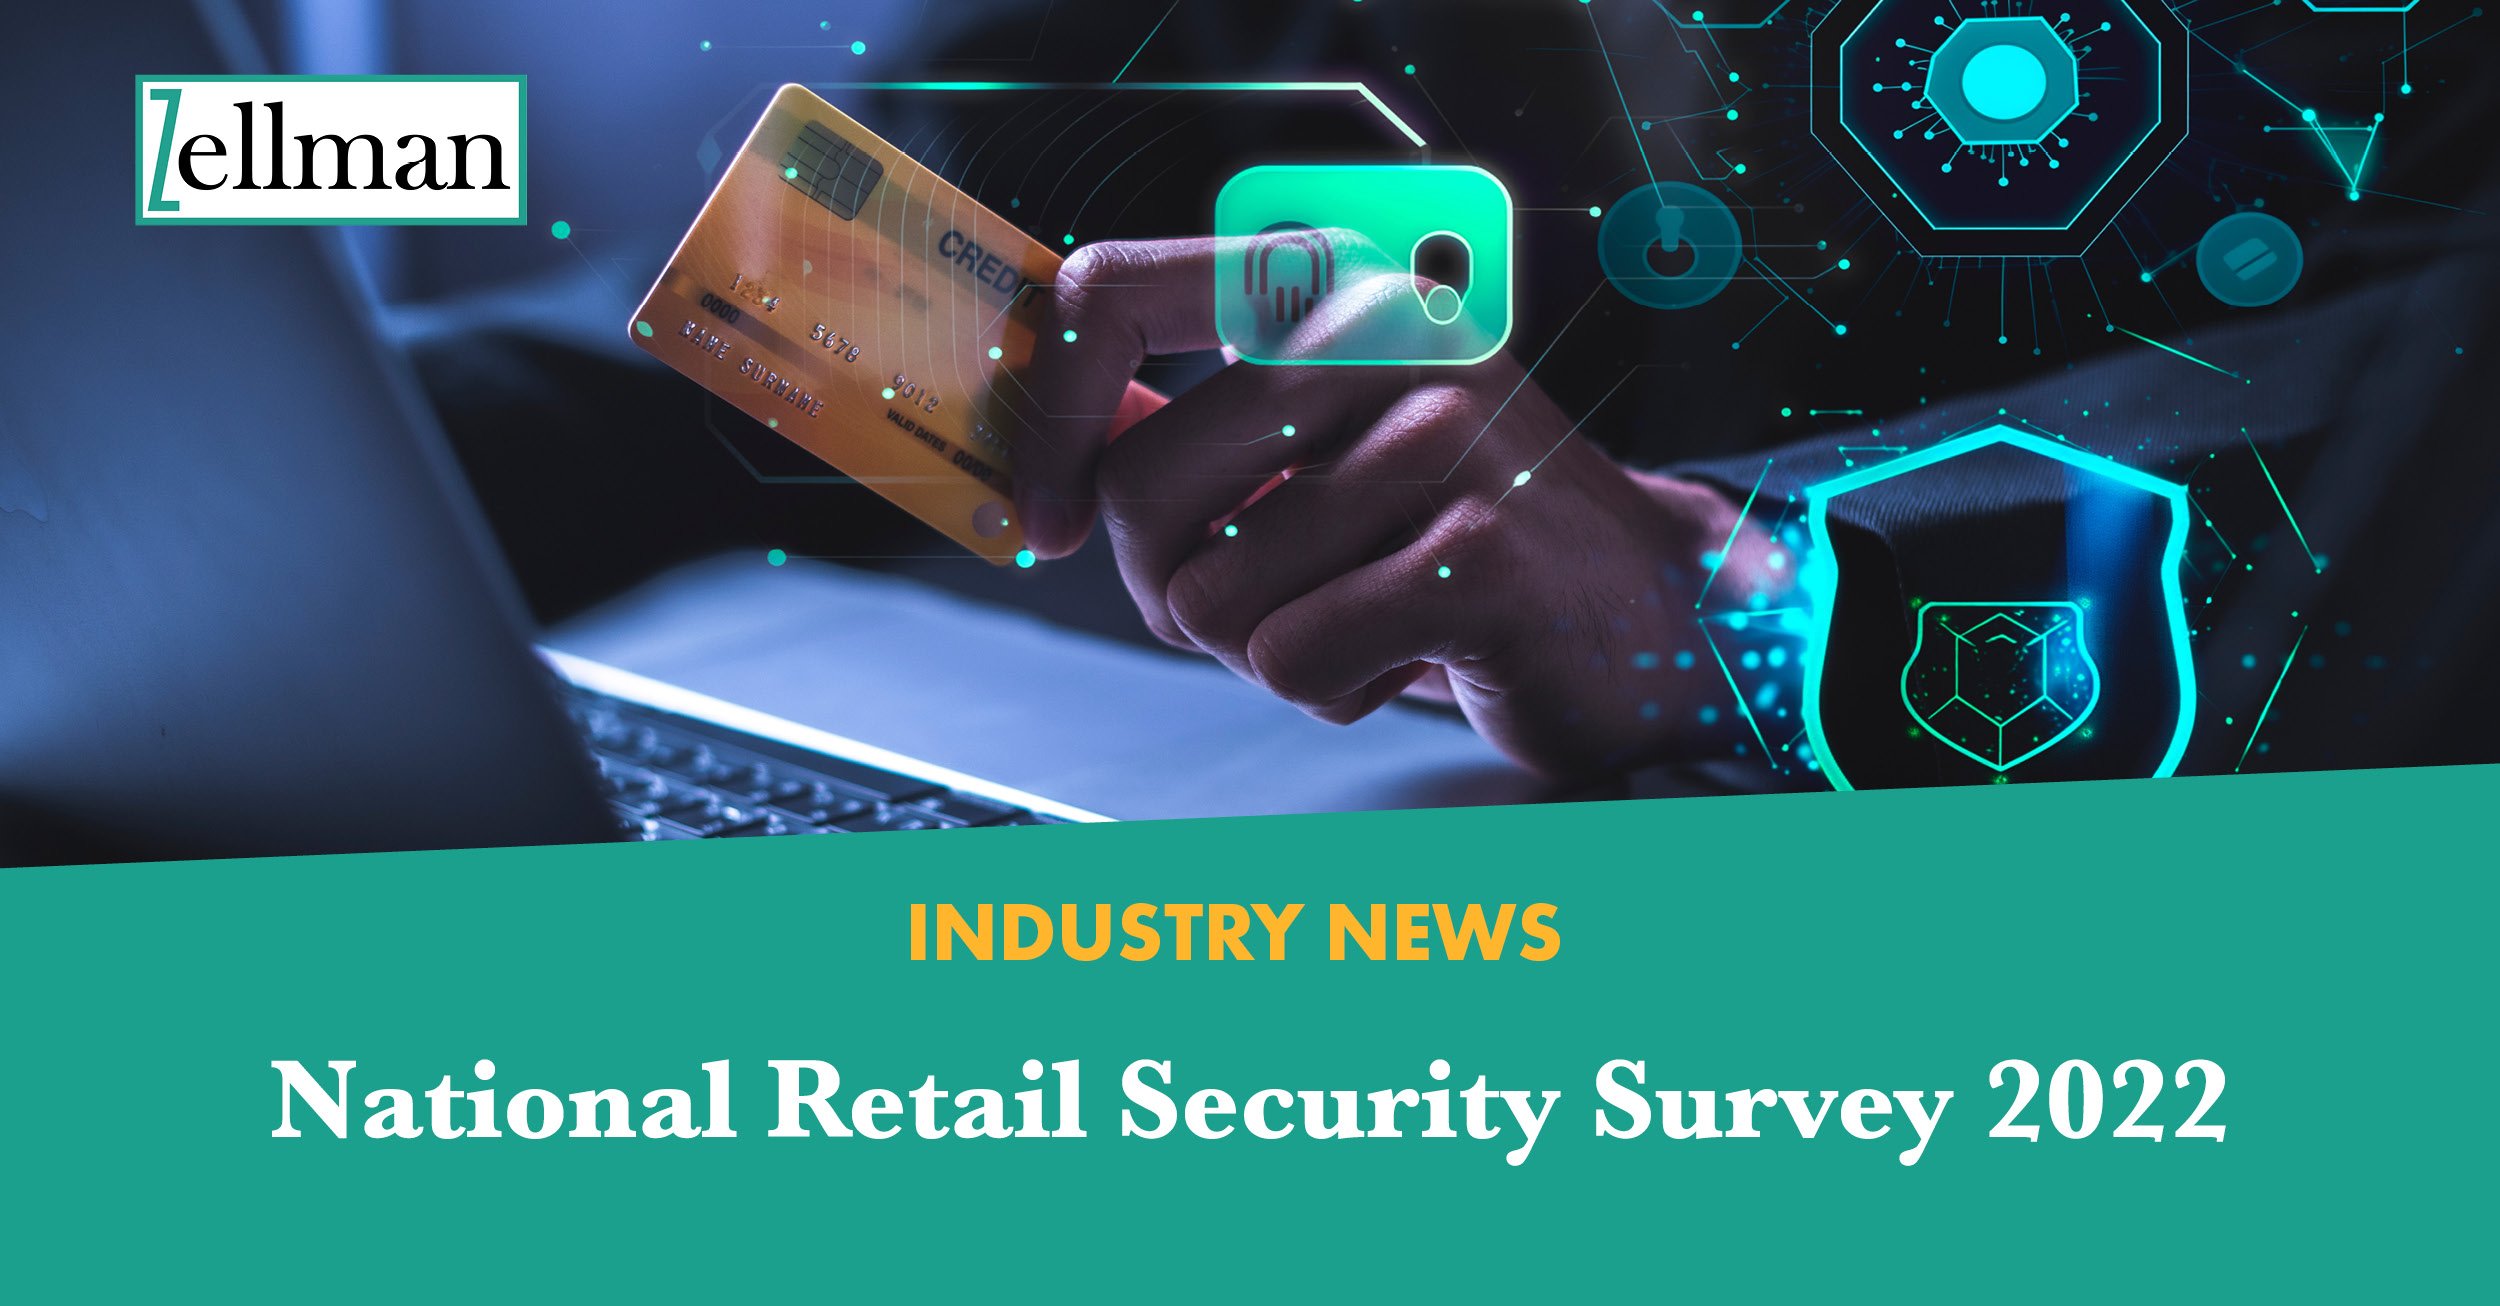 The Retail Security Survey